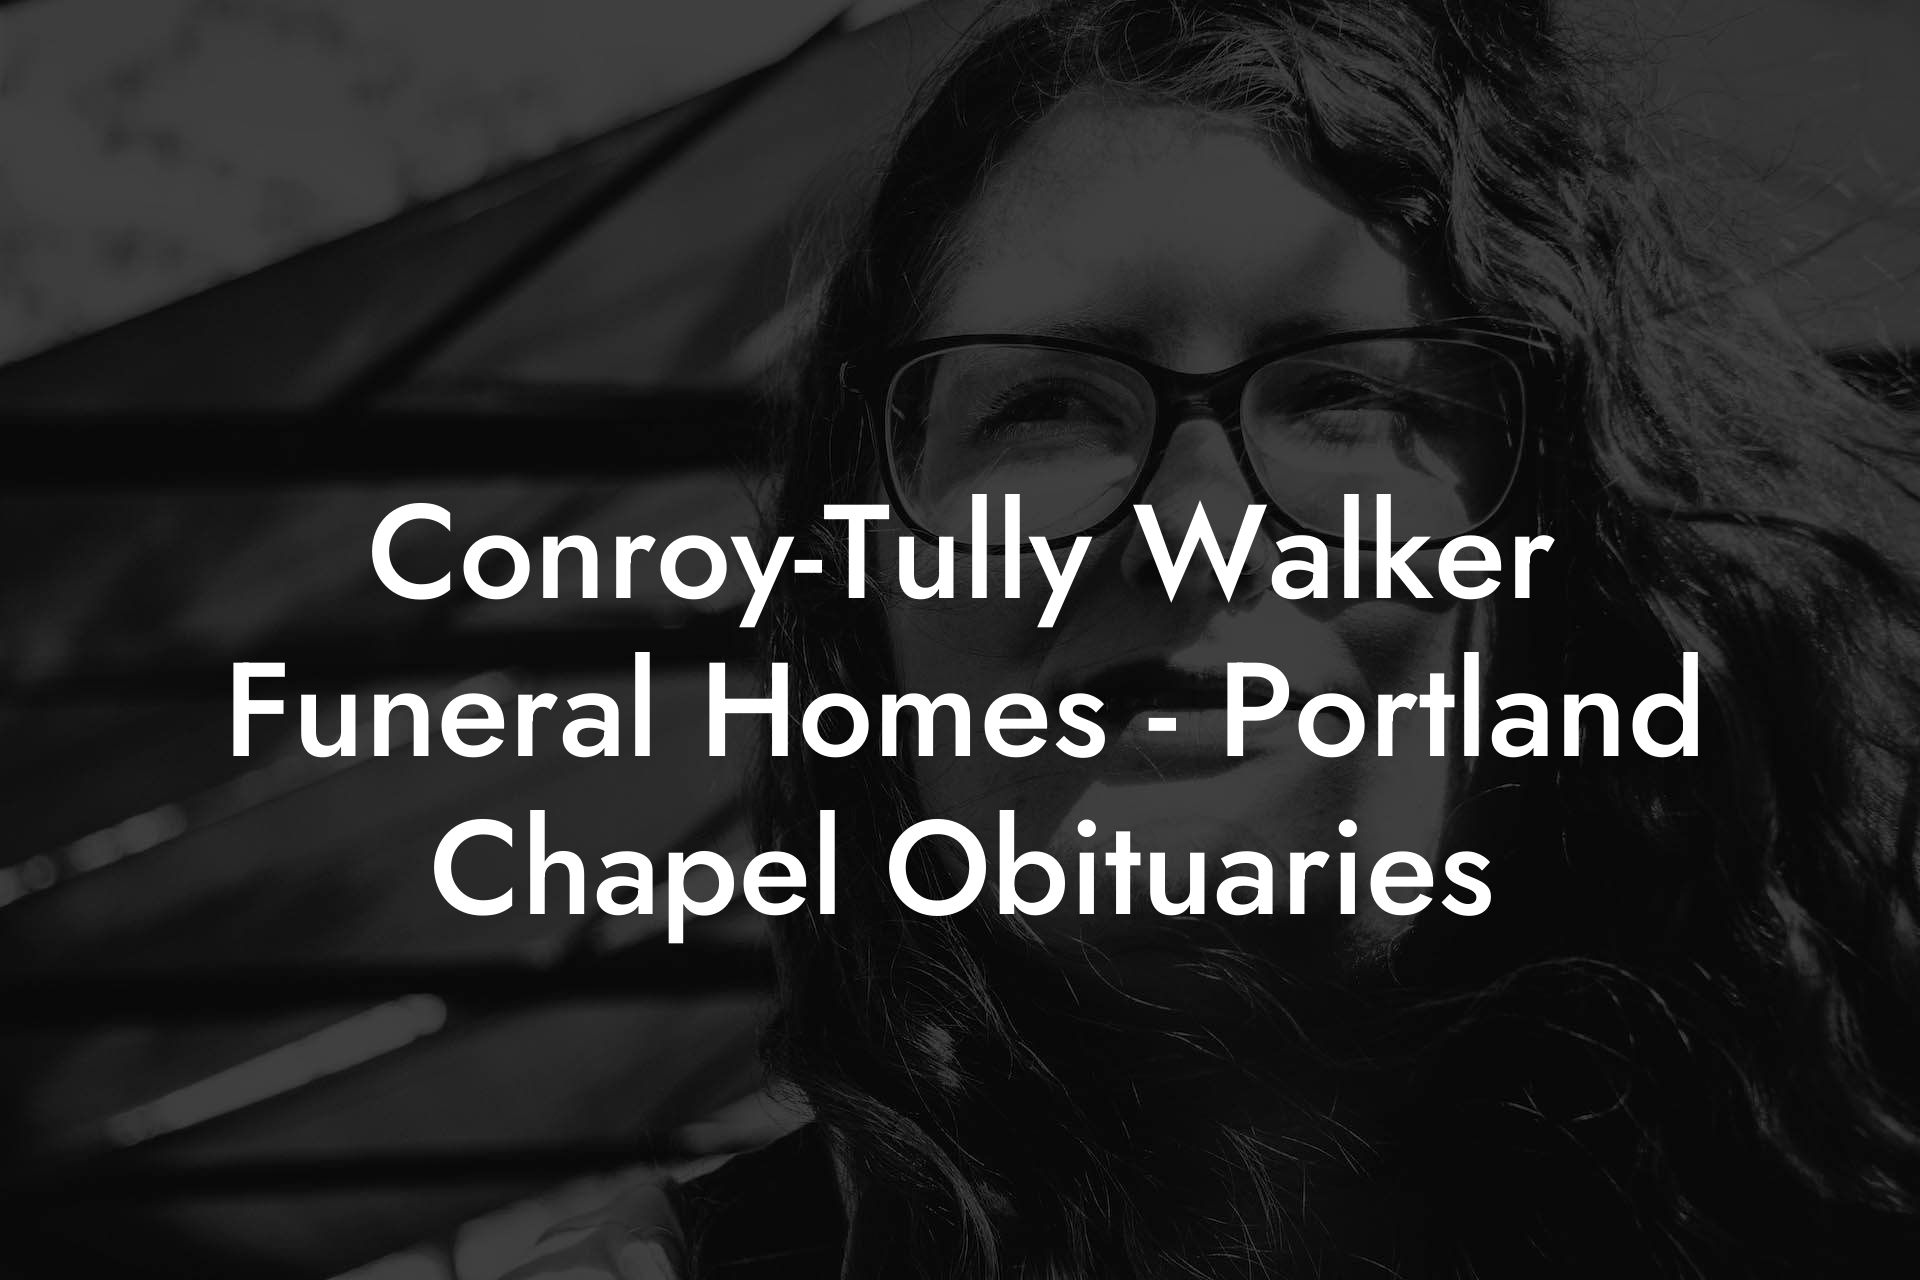 Conroy-Tully Walker Funeral Homes - Portland Chapel Obituaries